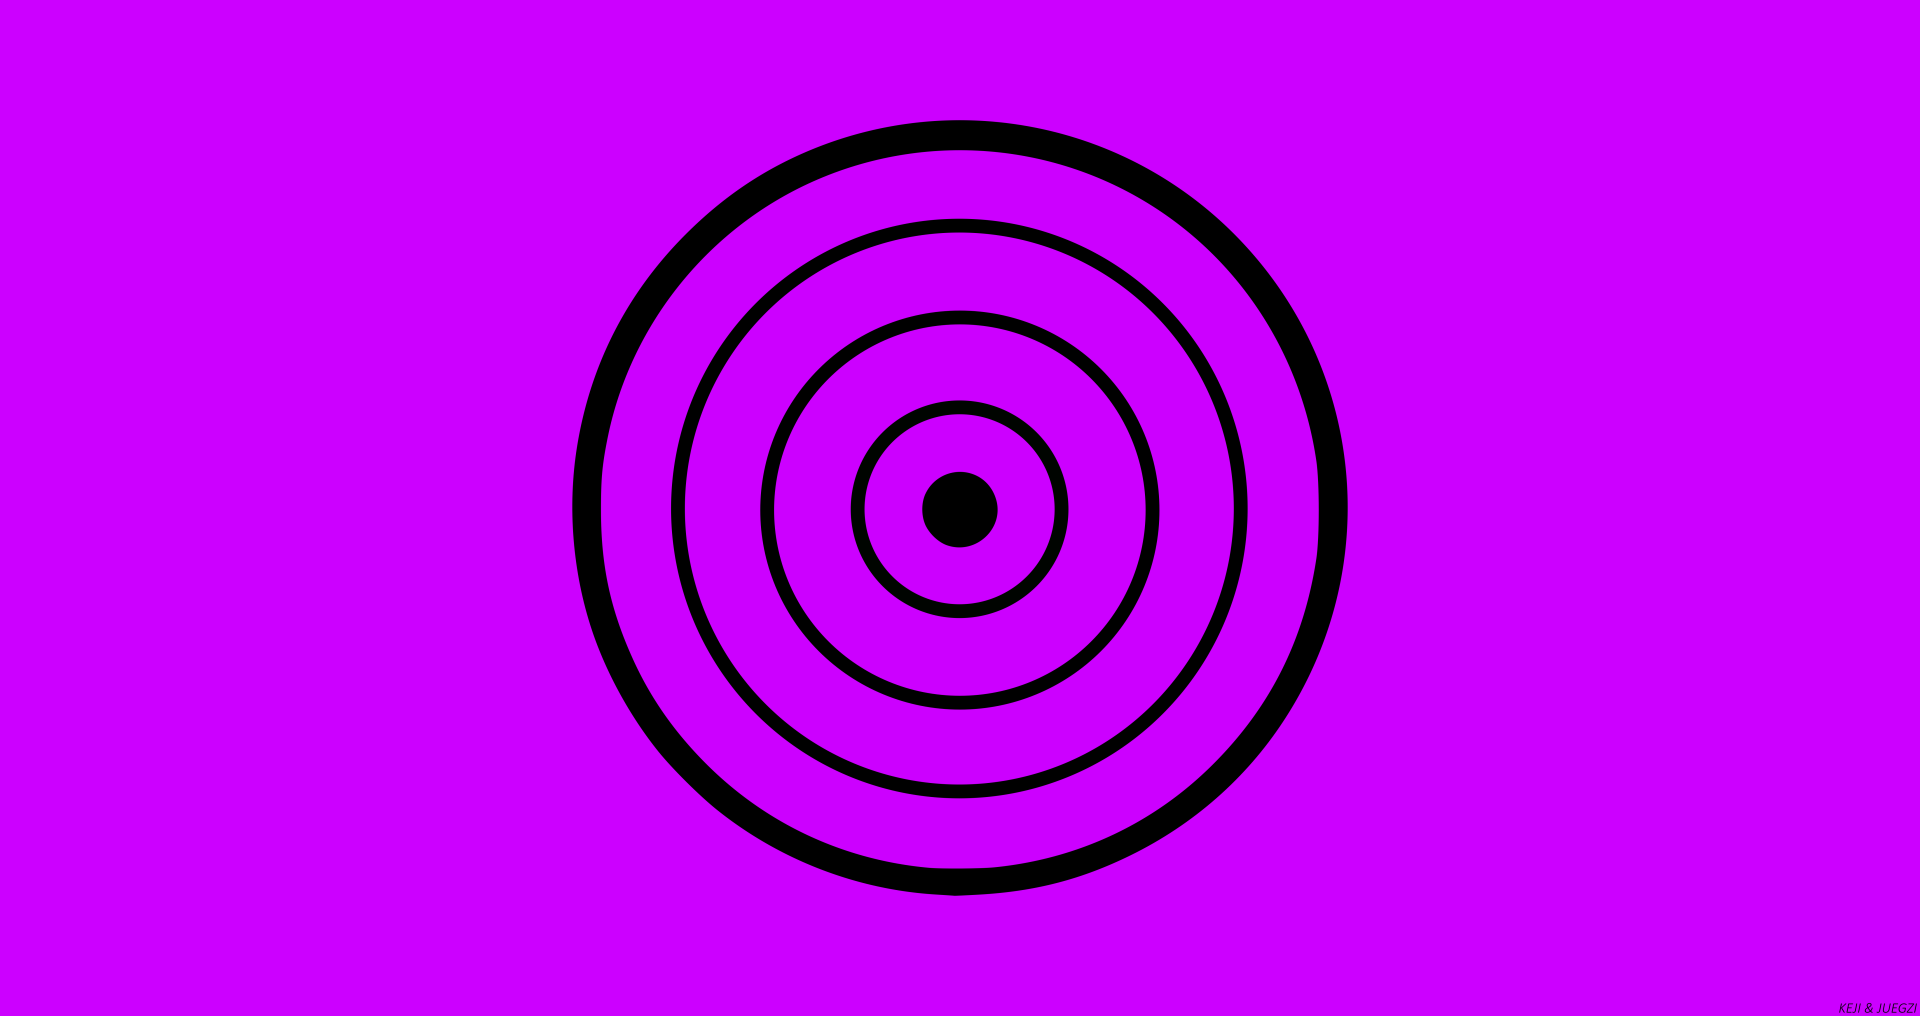 Rinnegan - Naruto Inspired - Horn Button - Court Purple/Black